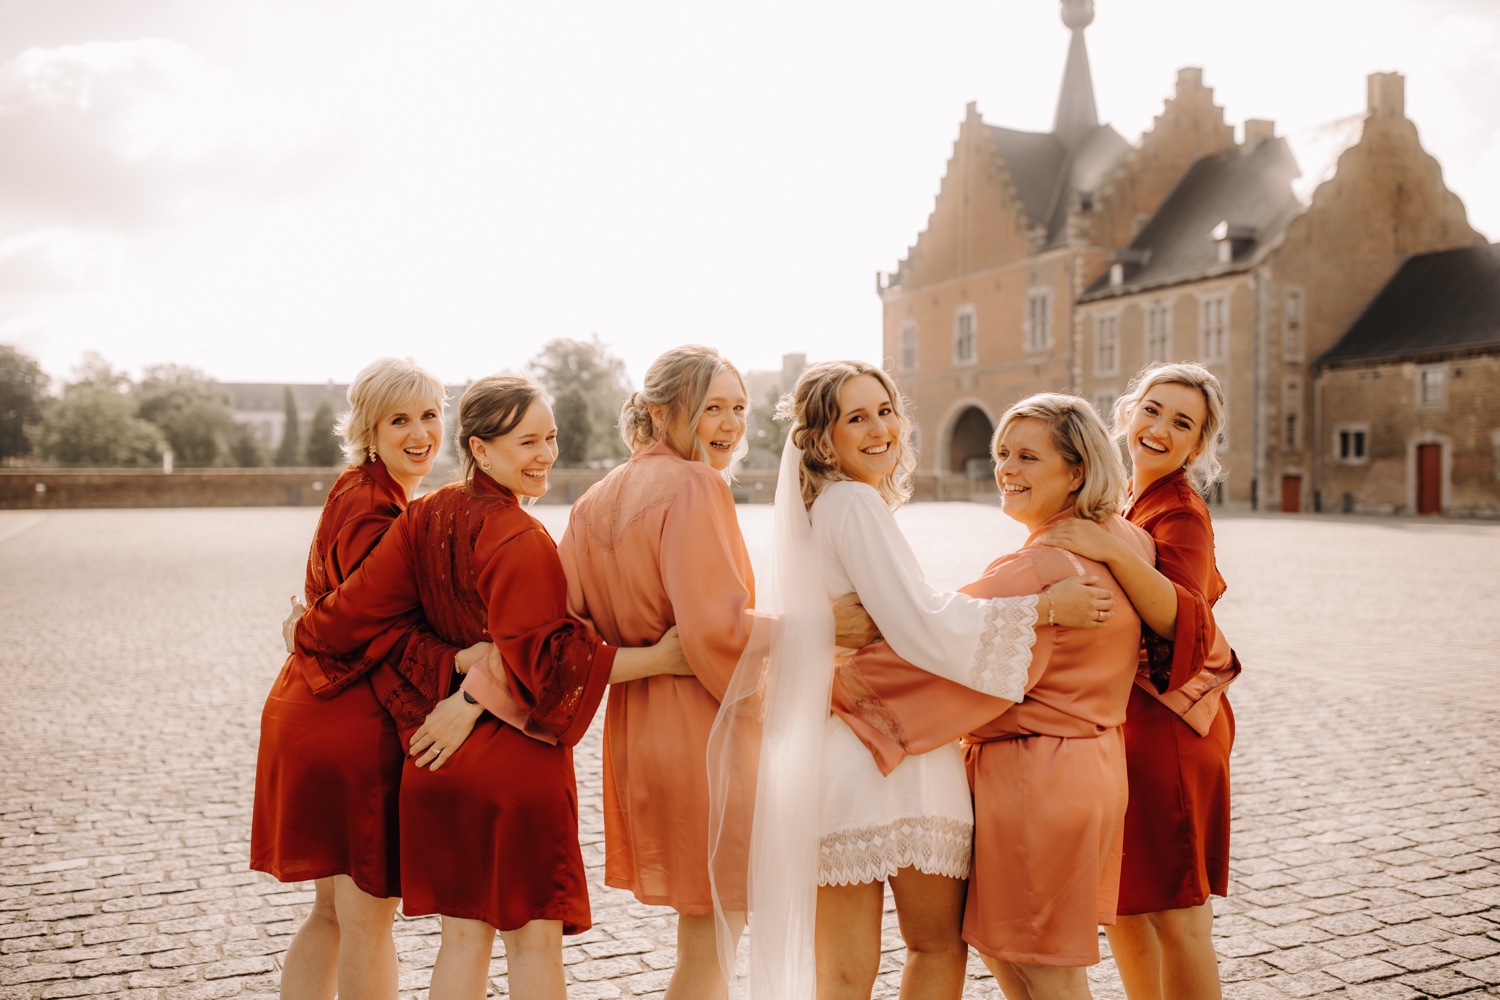 Huwelijksfotograaf Limburg - bruidsmeisjes poseren samen in kimono